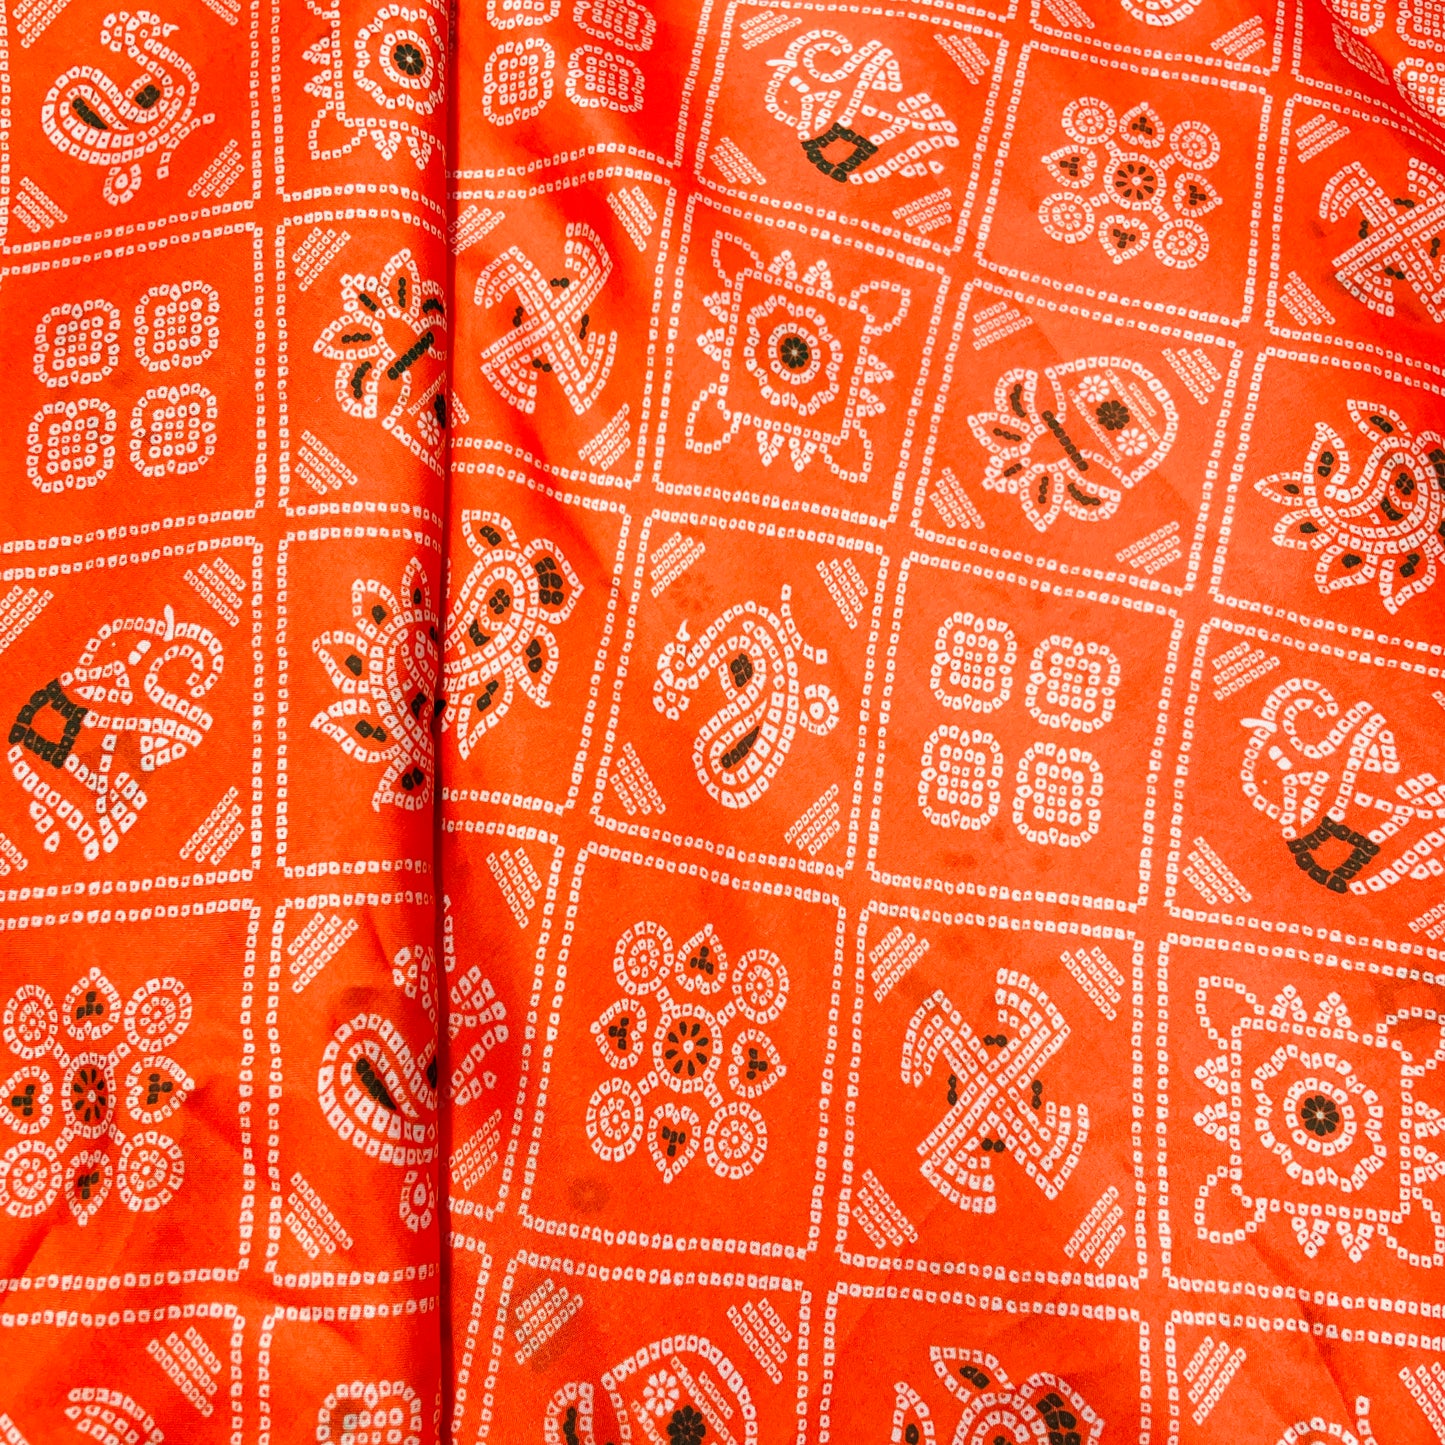 Orange Traditional Print Georgette Satin Fabric - TradeUNO